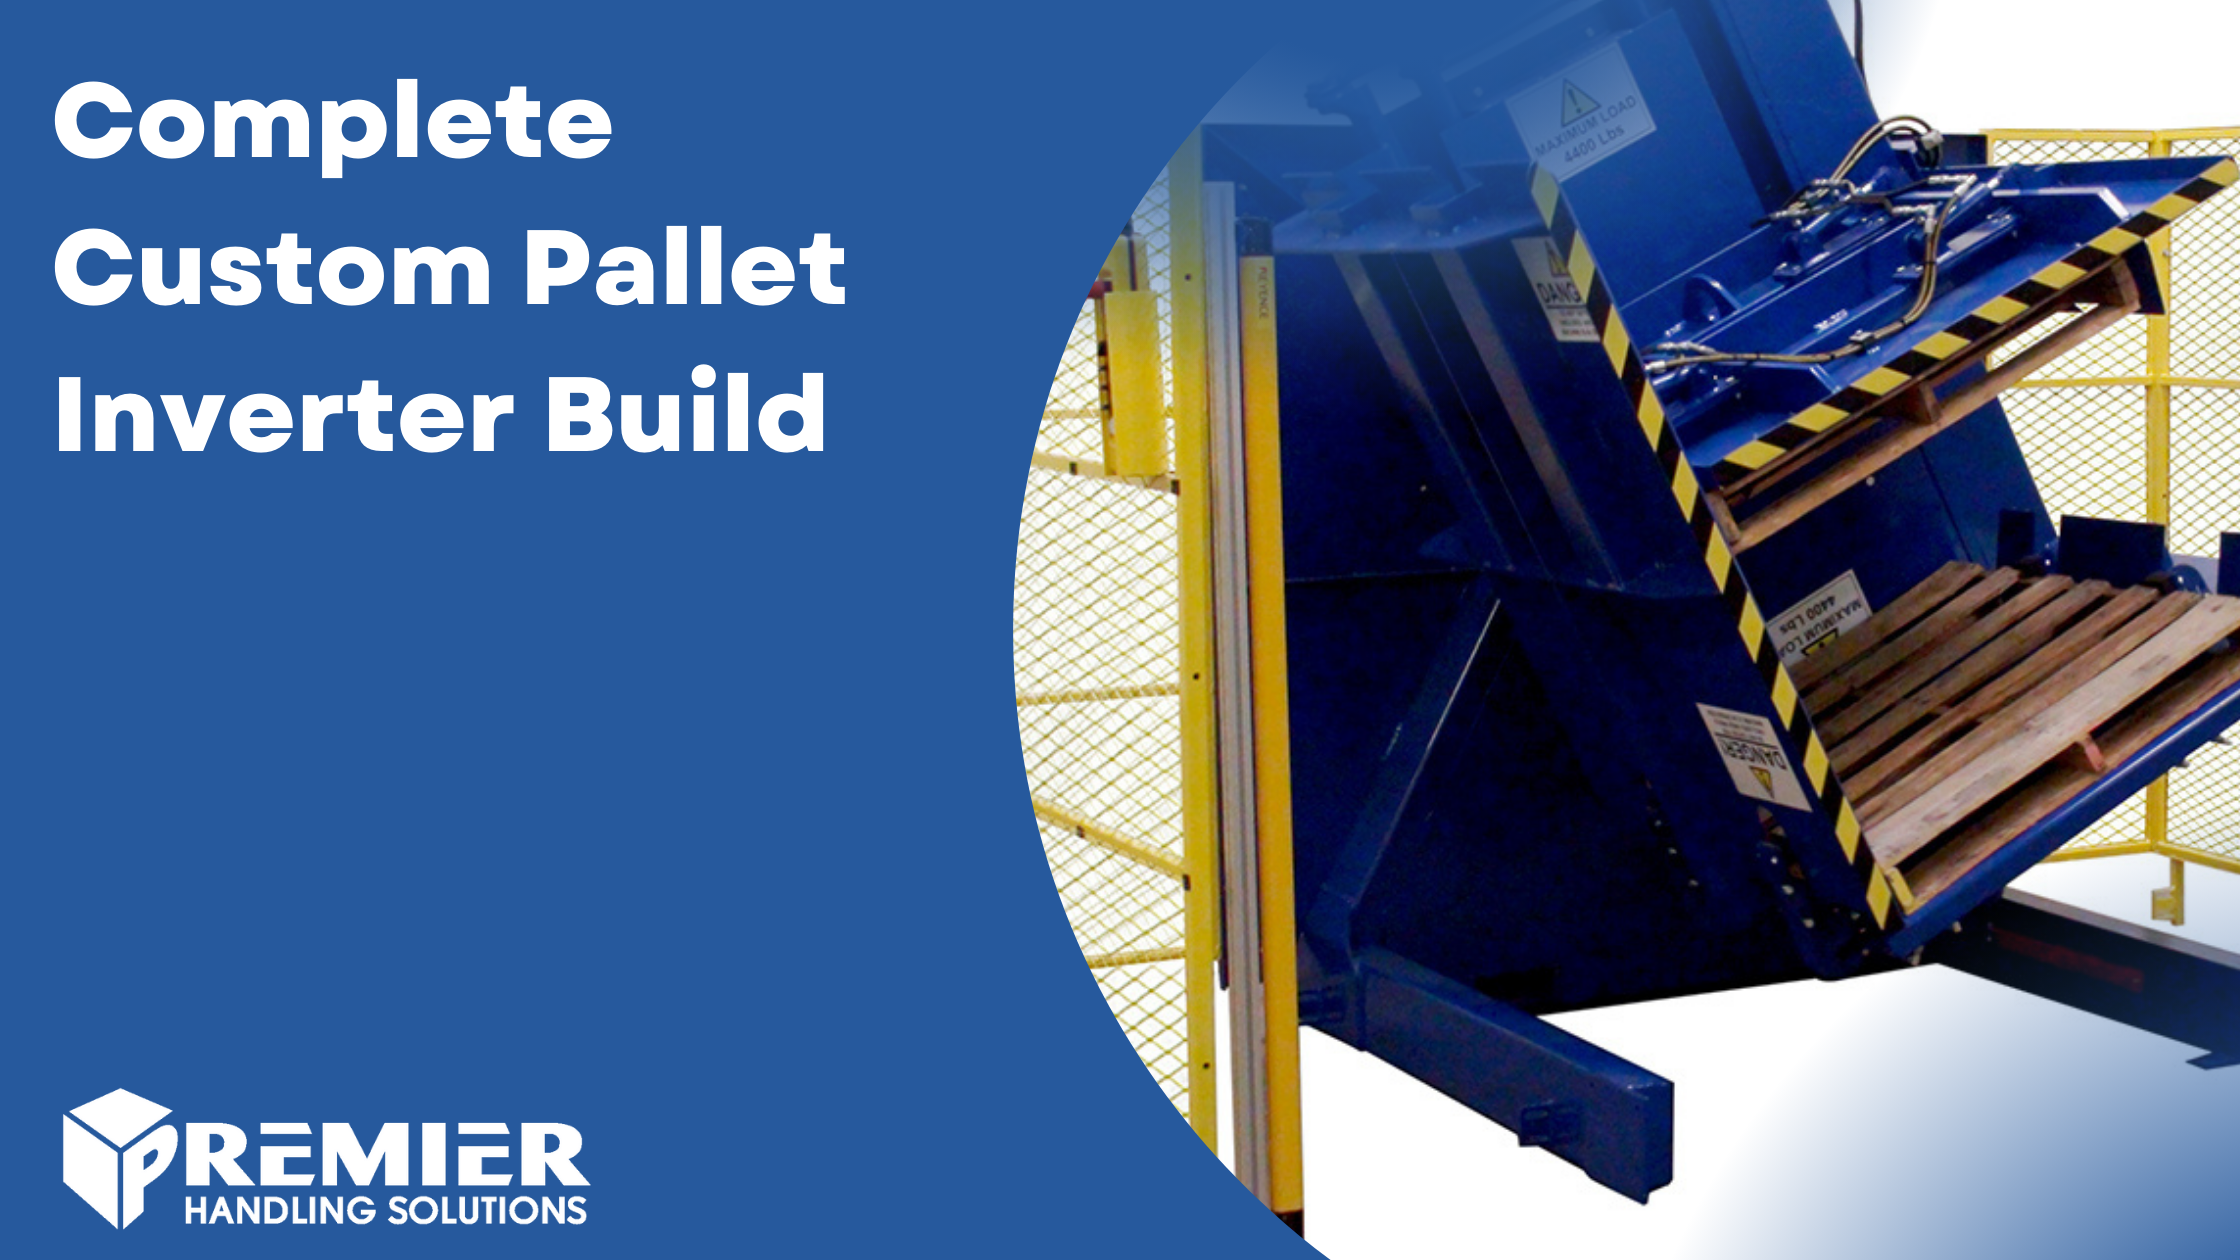 Complete Custom Pallet Inverter Build